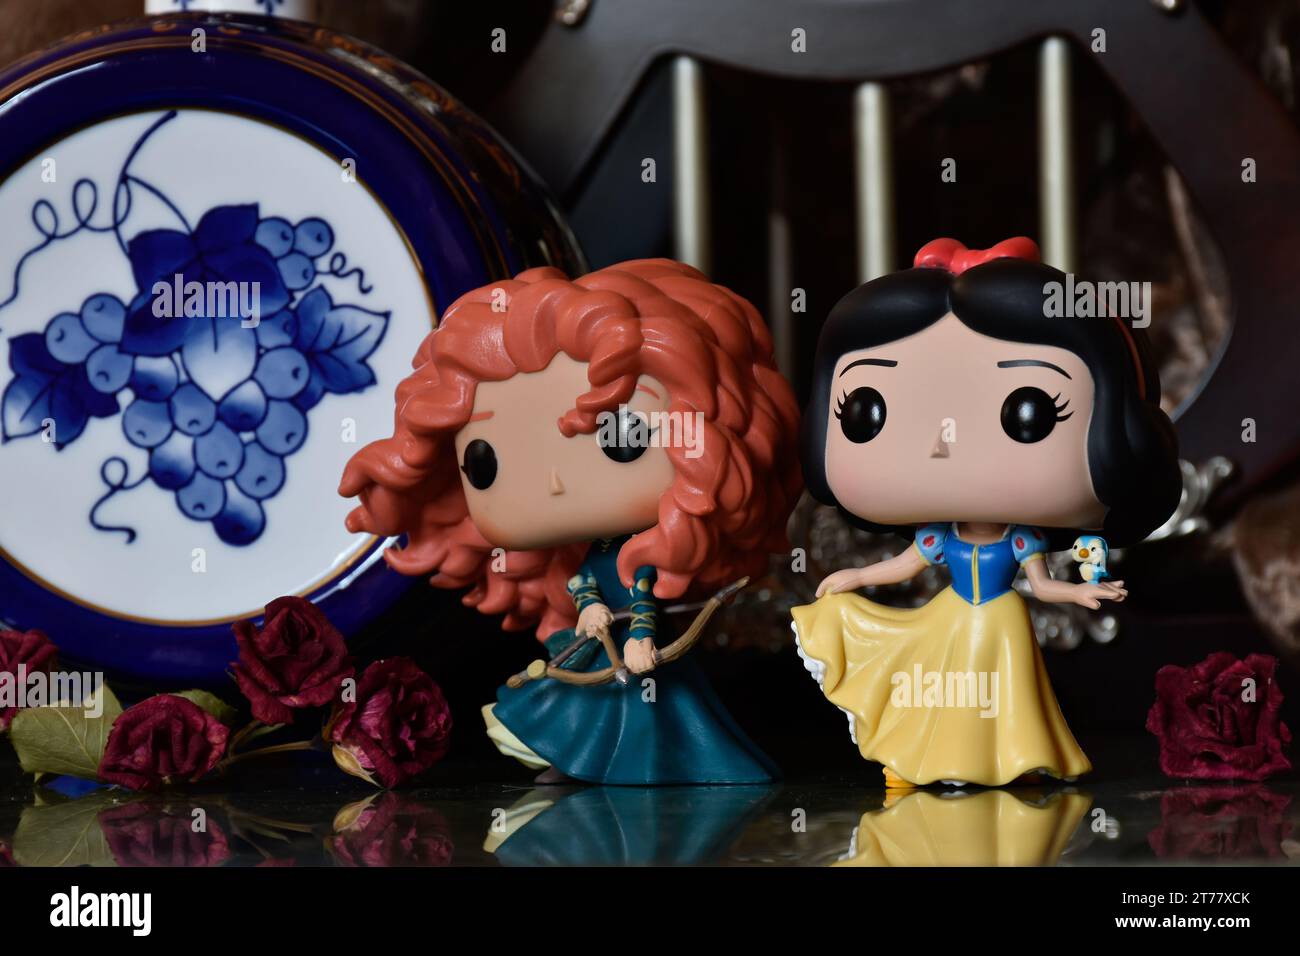 Funko Pop action figures of Disney princesses Merida (Brave) and Snow White. Medieval castle, fabulous kingdom, red roses, porcelain blue keg. Stock Photo